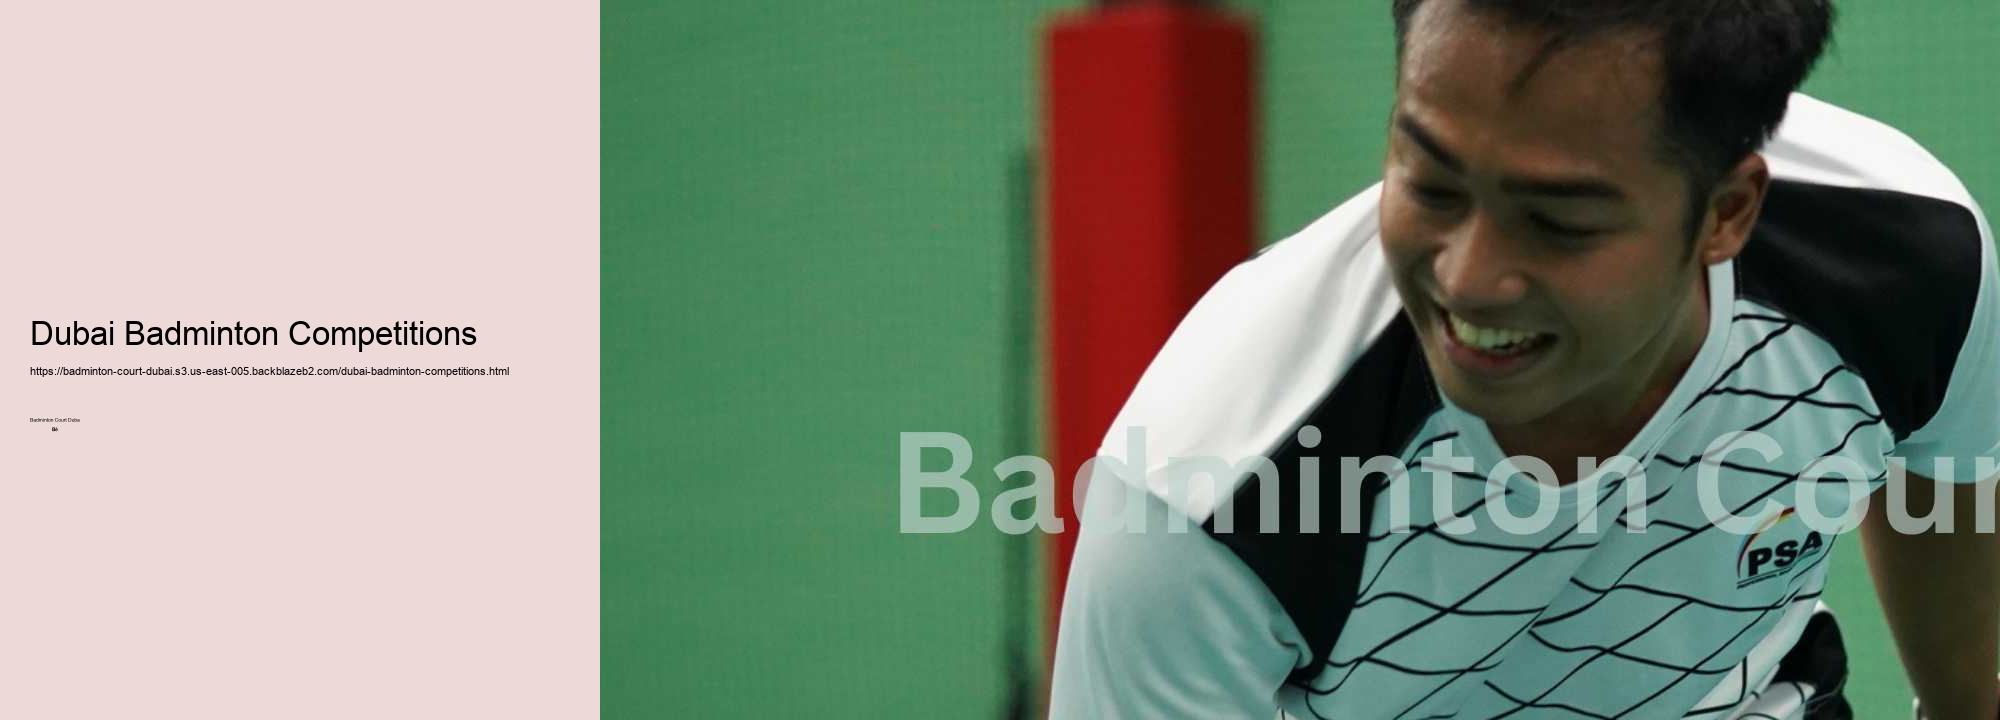 Dubai Badminton Competitions